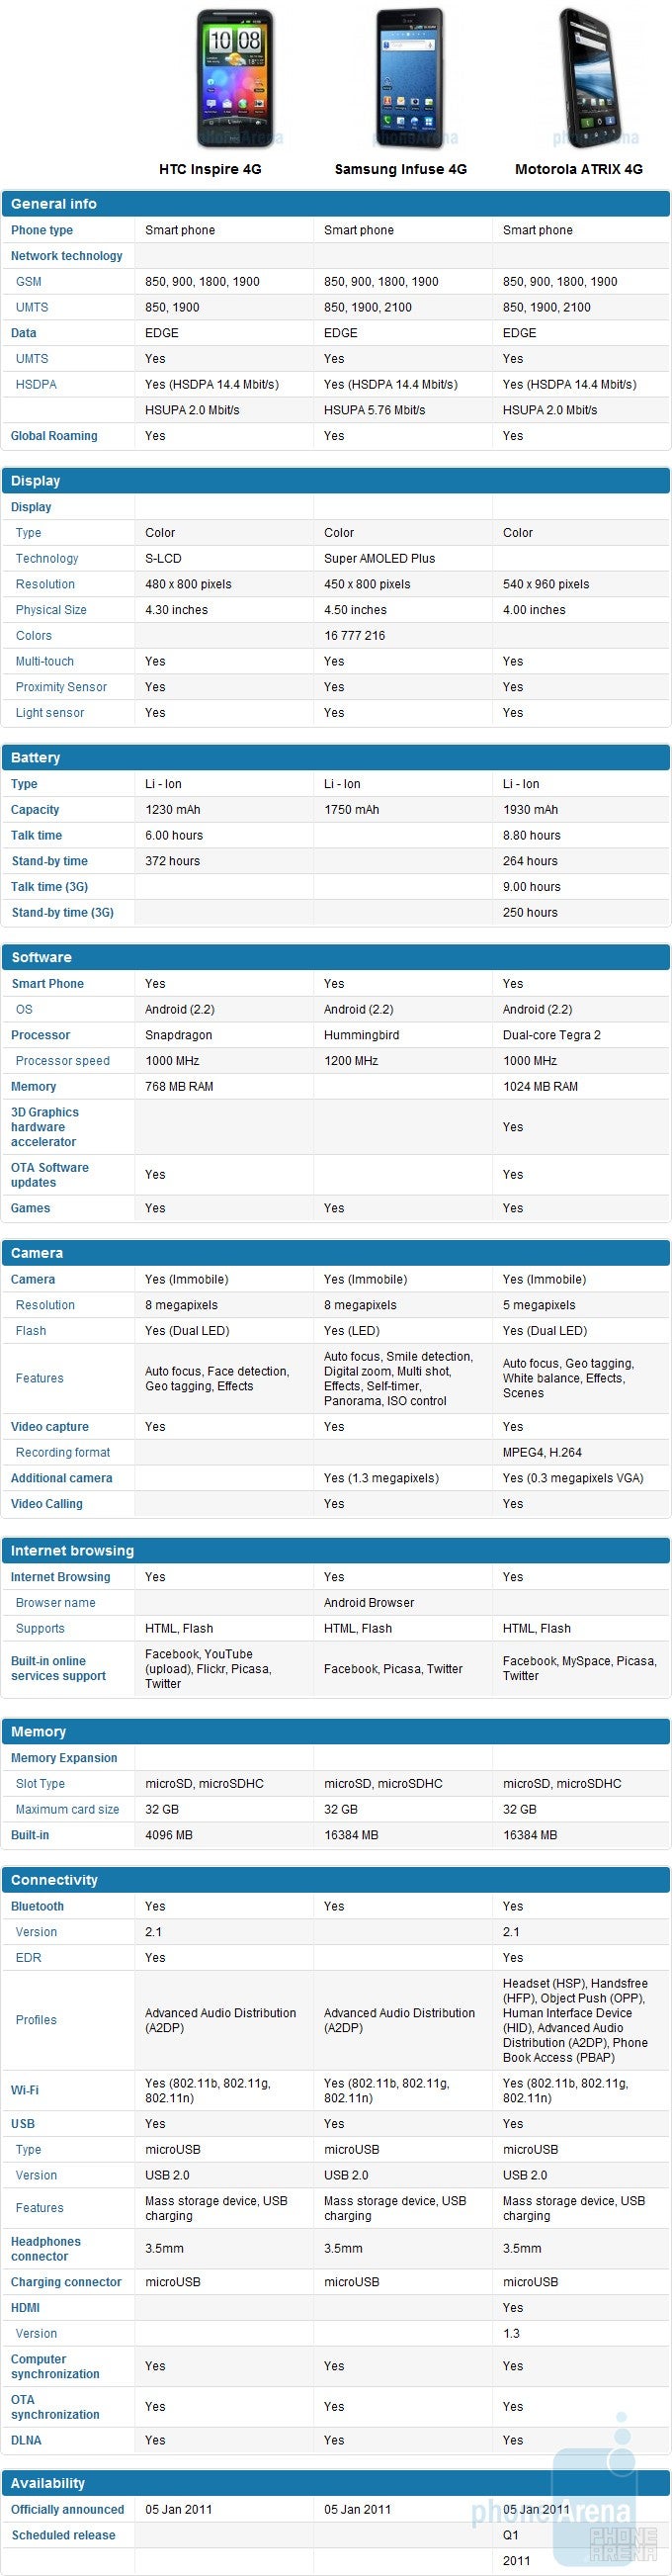 HTC Inspire 4G vs Samsung Infuse 4G vs Motorola ATRIX 4G: specs comparison